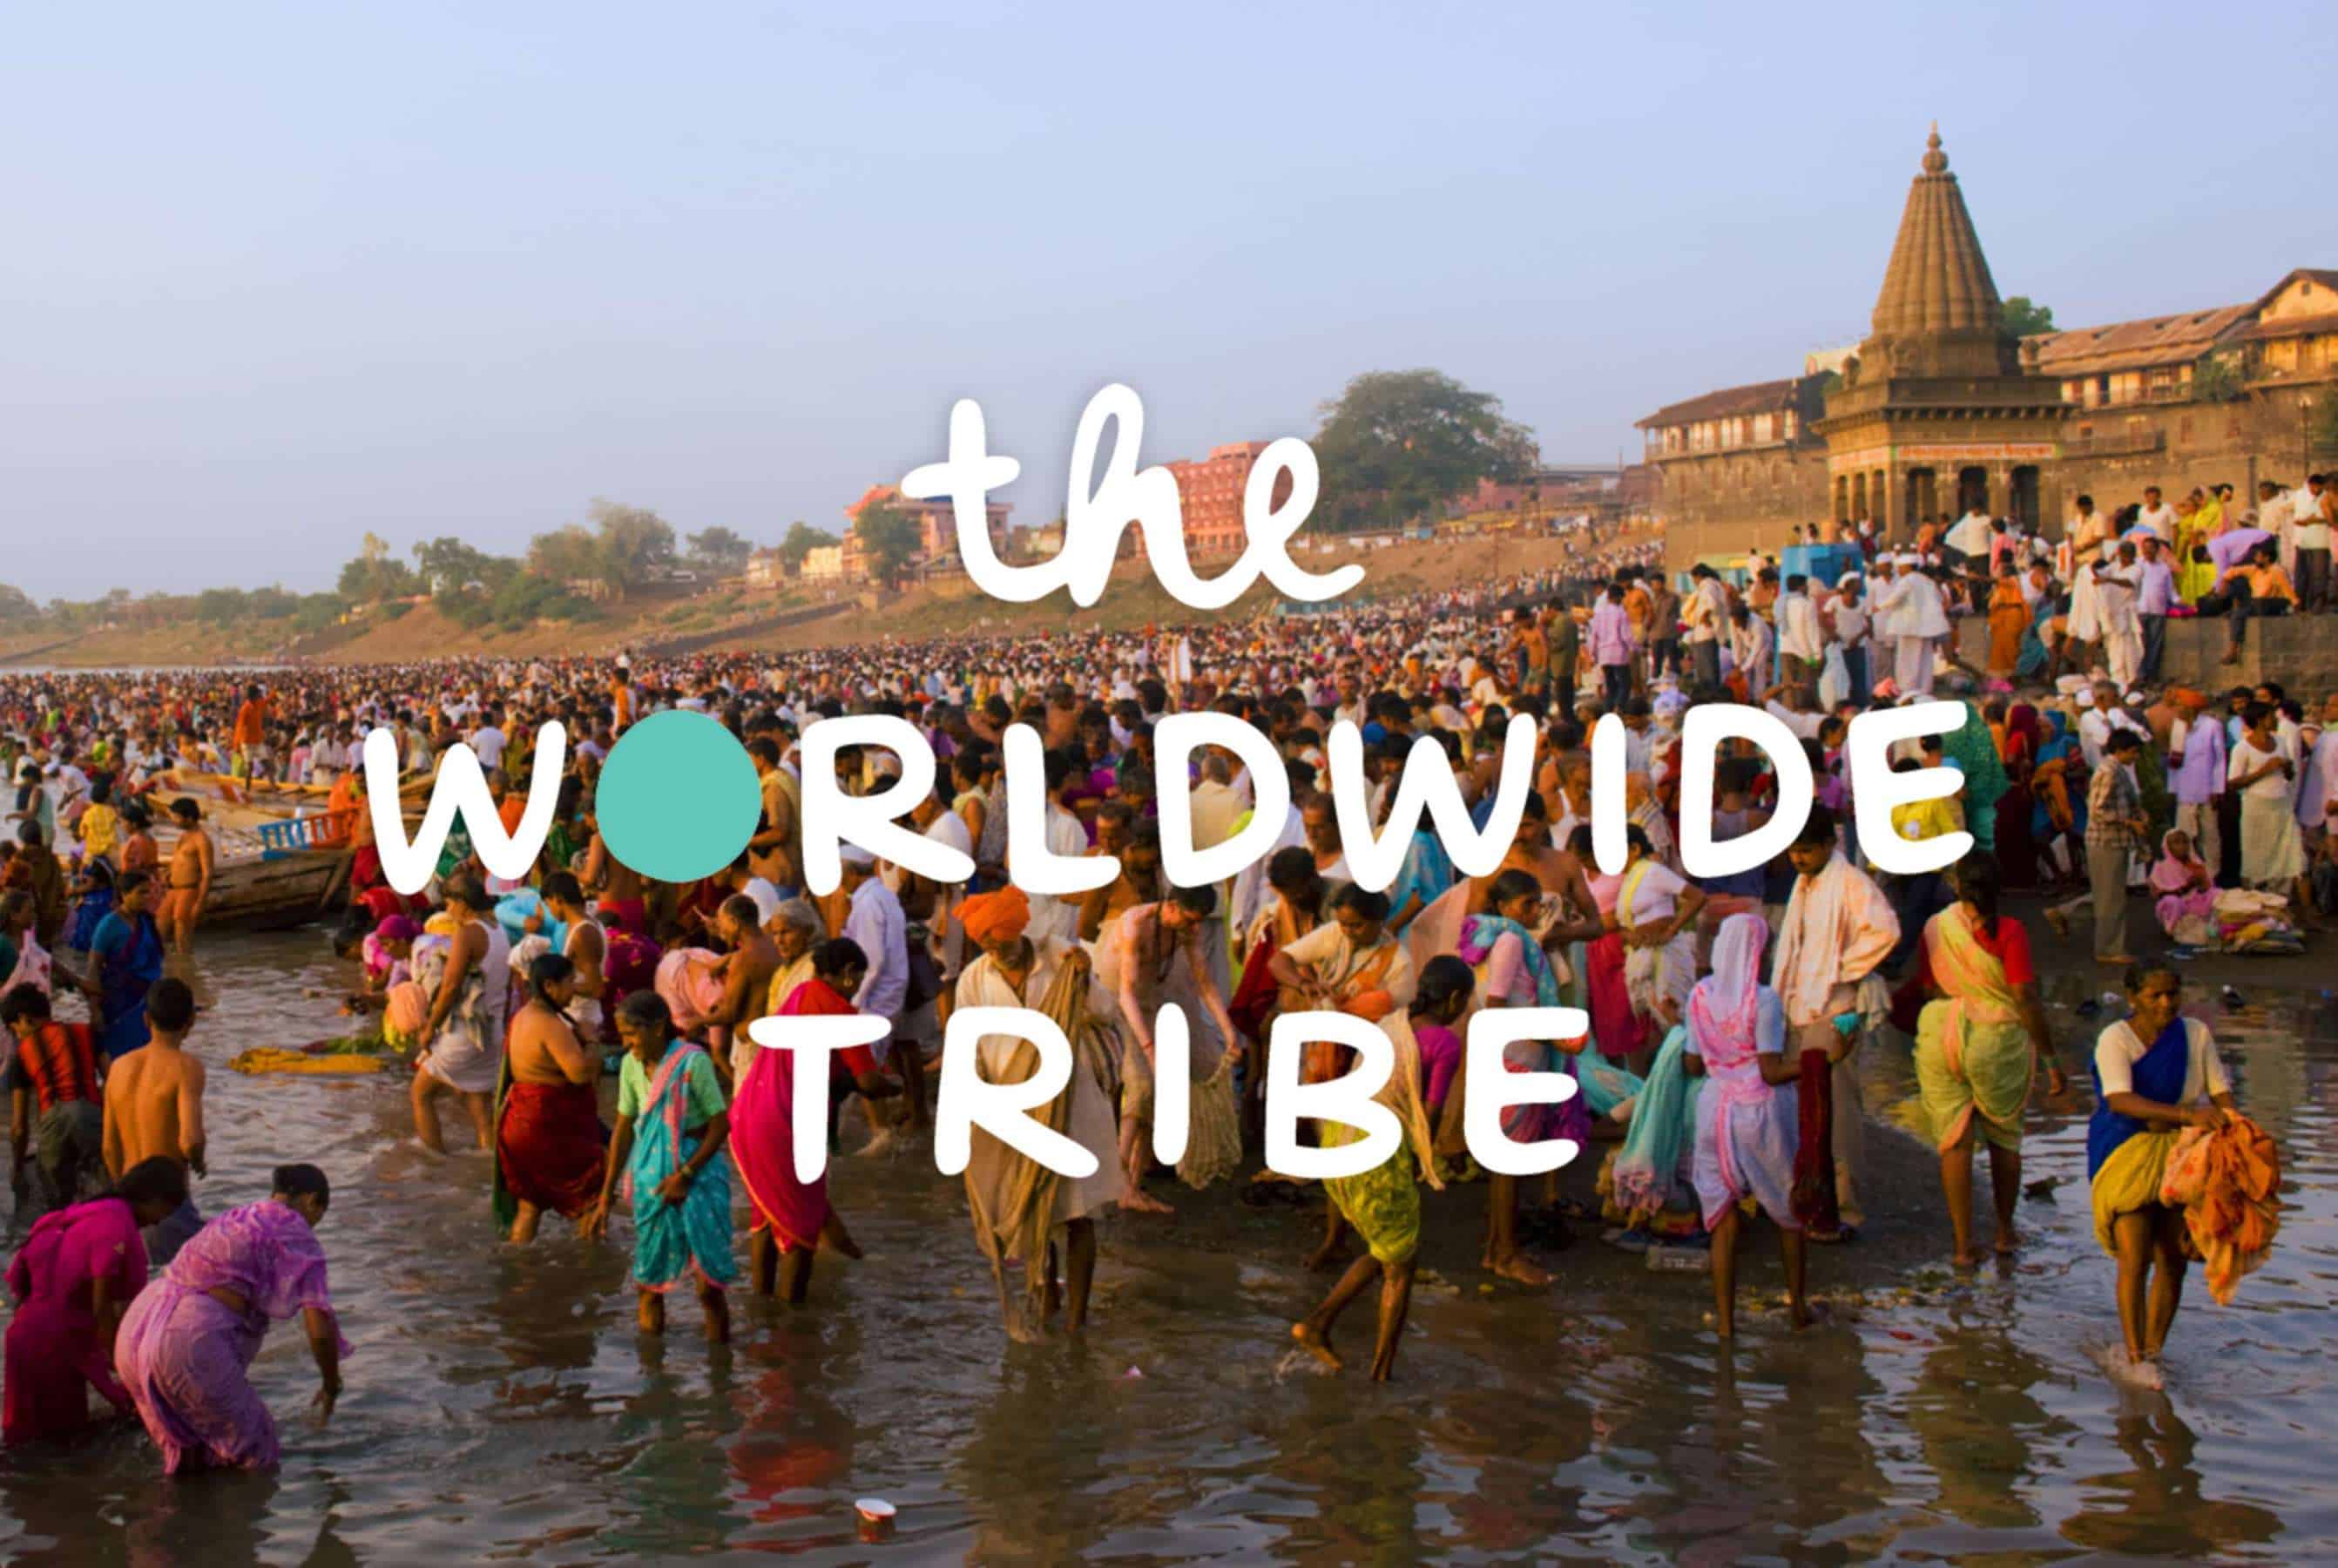 The worldwide tribe